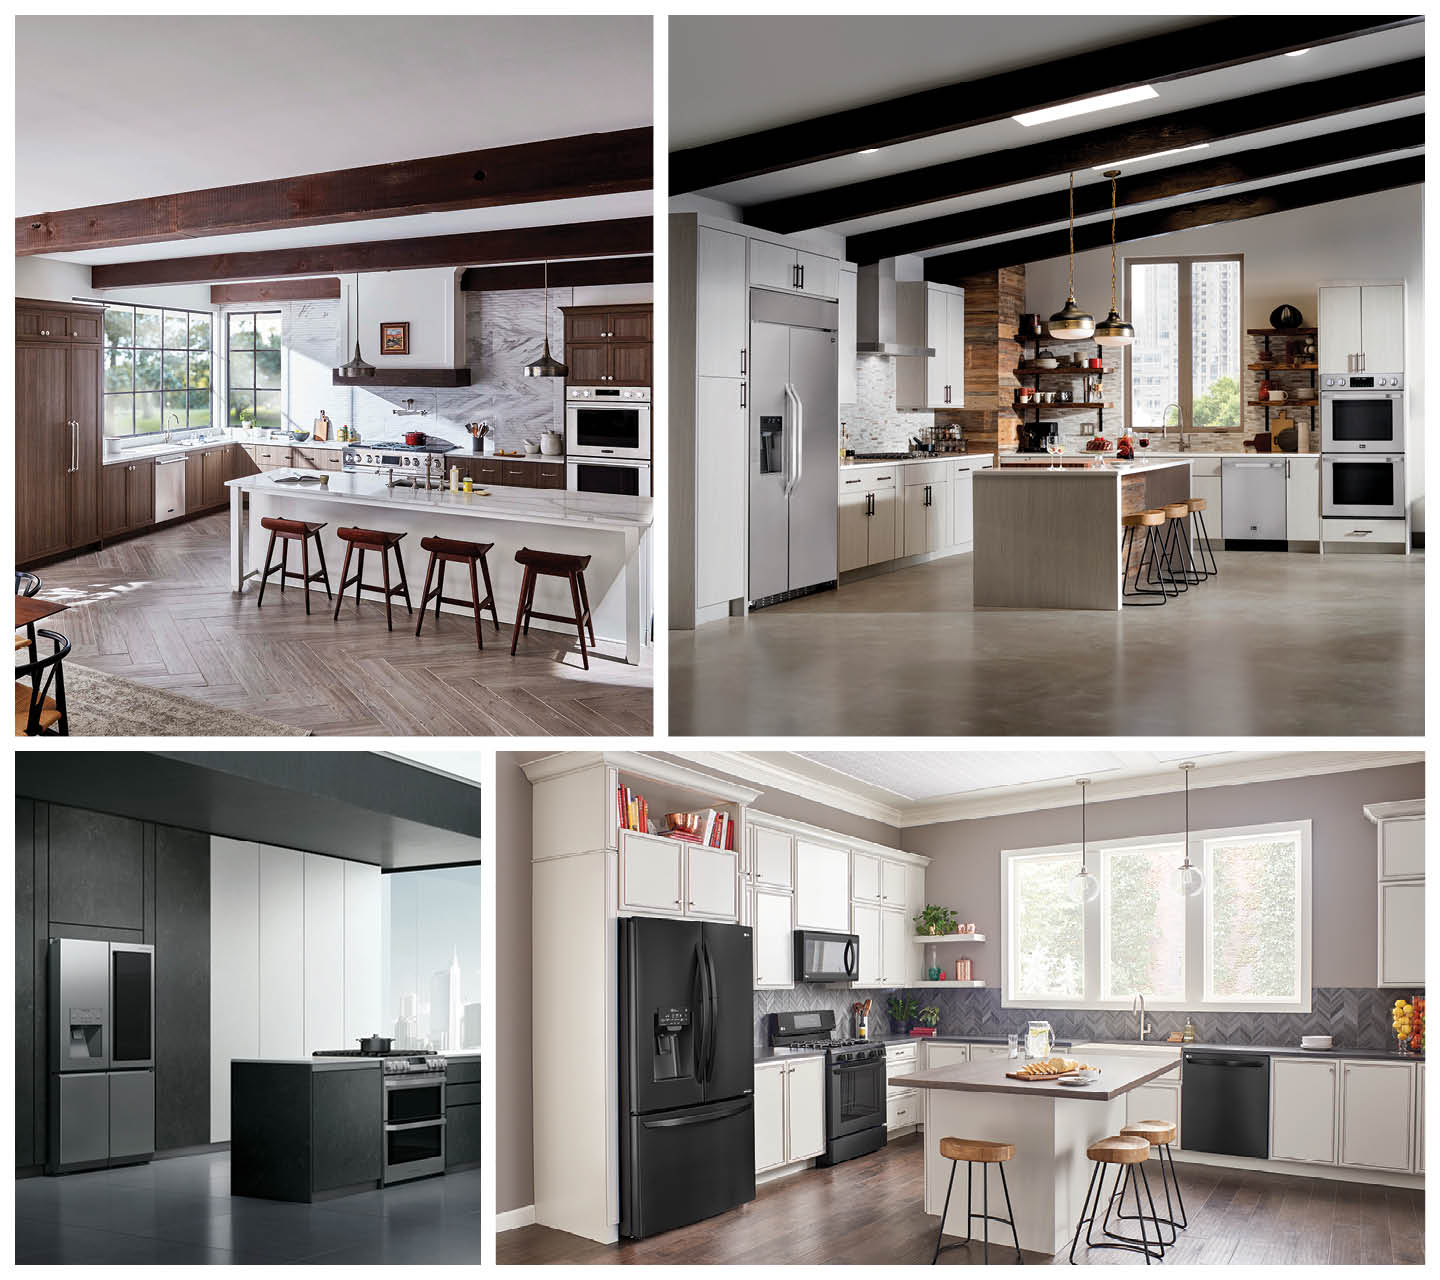 LG Builder Kitchen Appliances with SKS